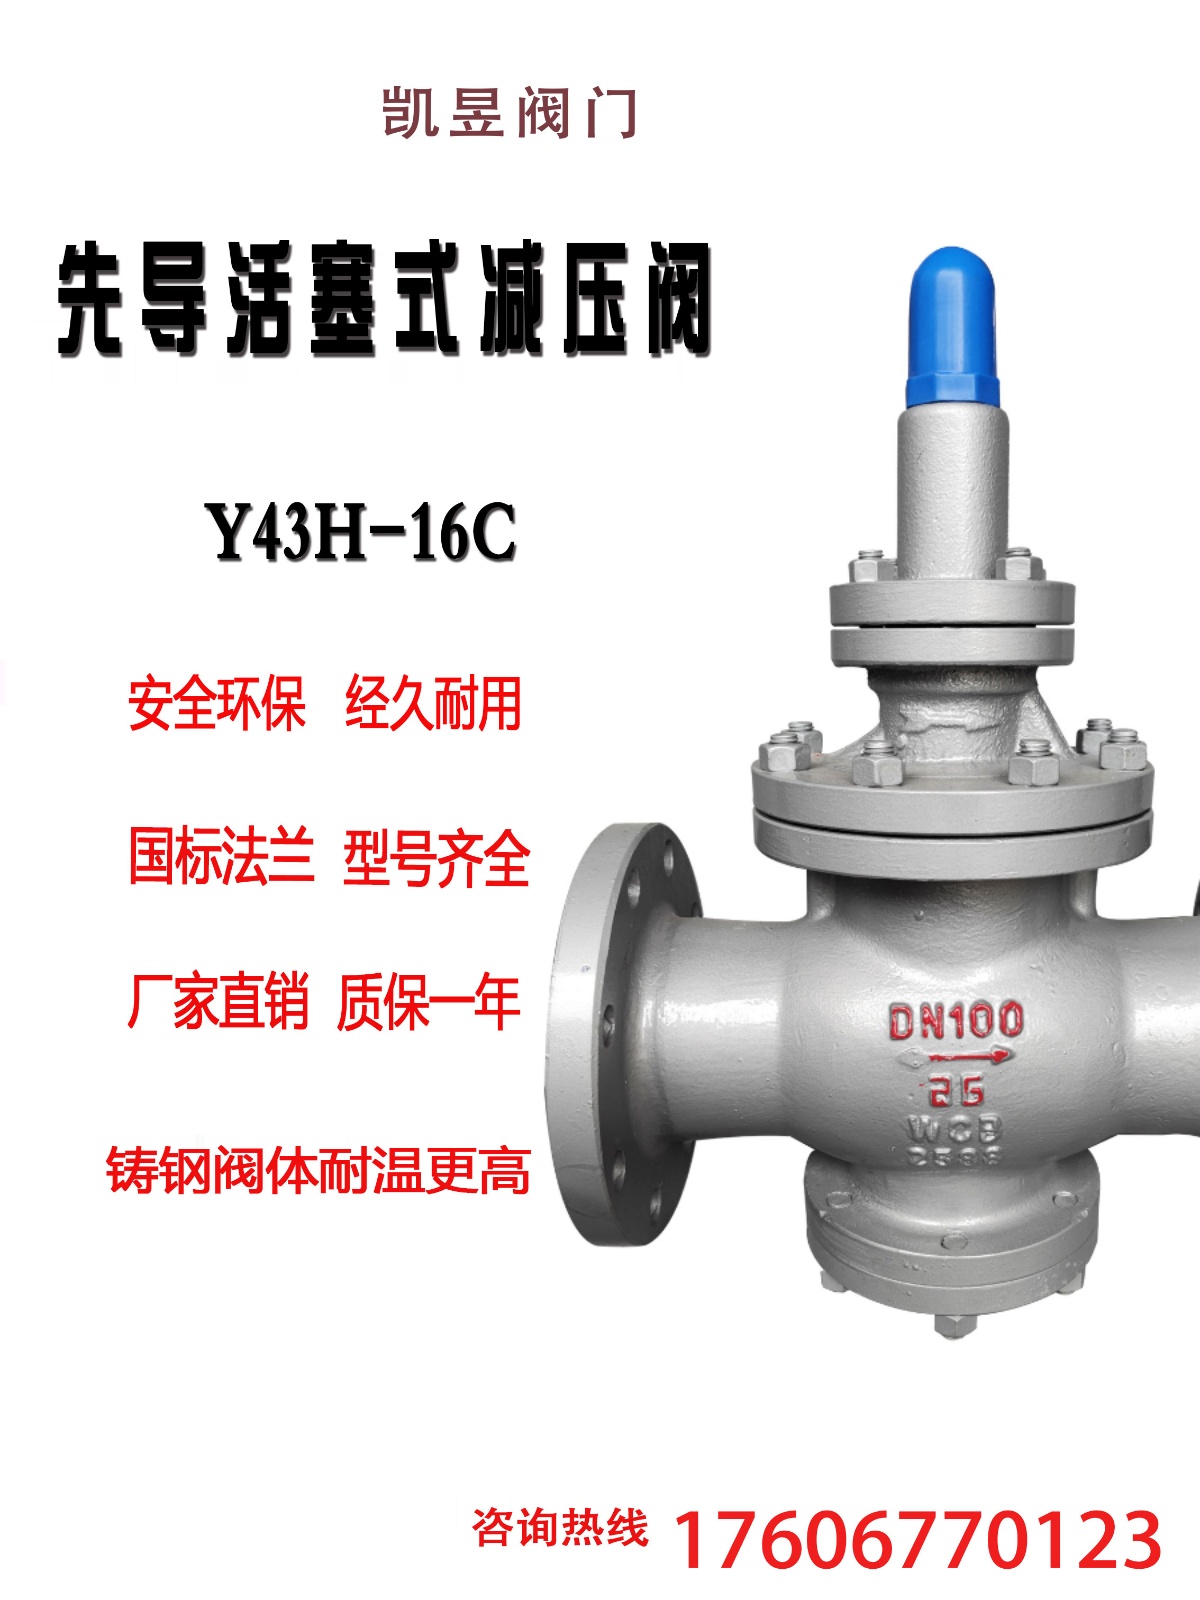 Y43H-16C铸钢法兰蒸汽减压阀高温锅炉先导活塞式专用调压阀DN2550